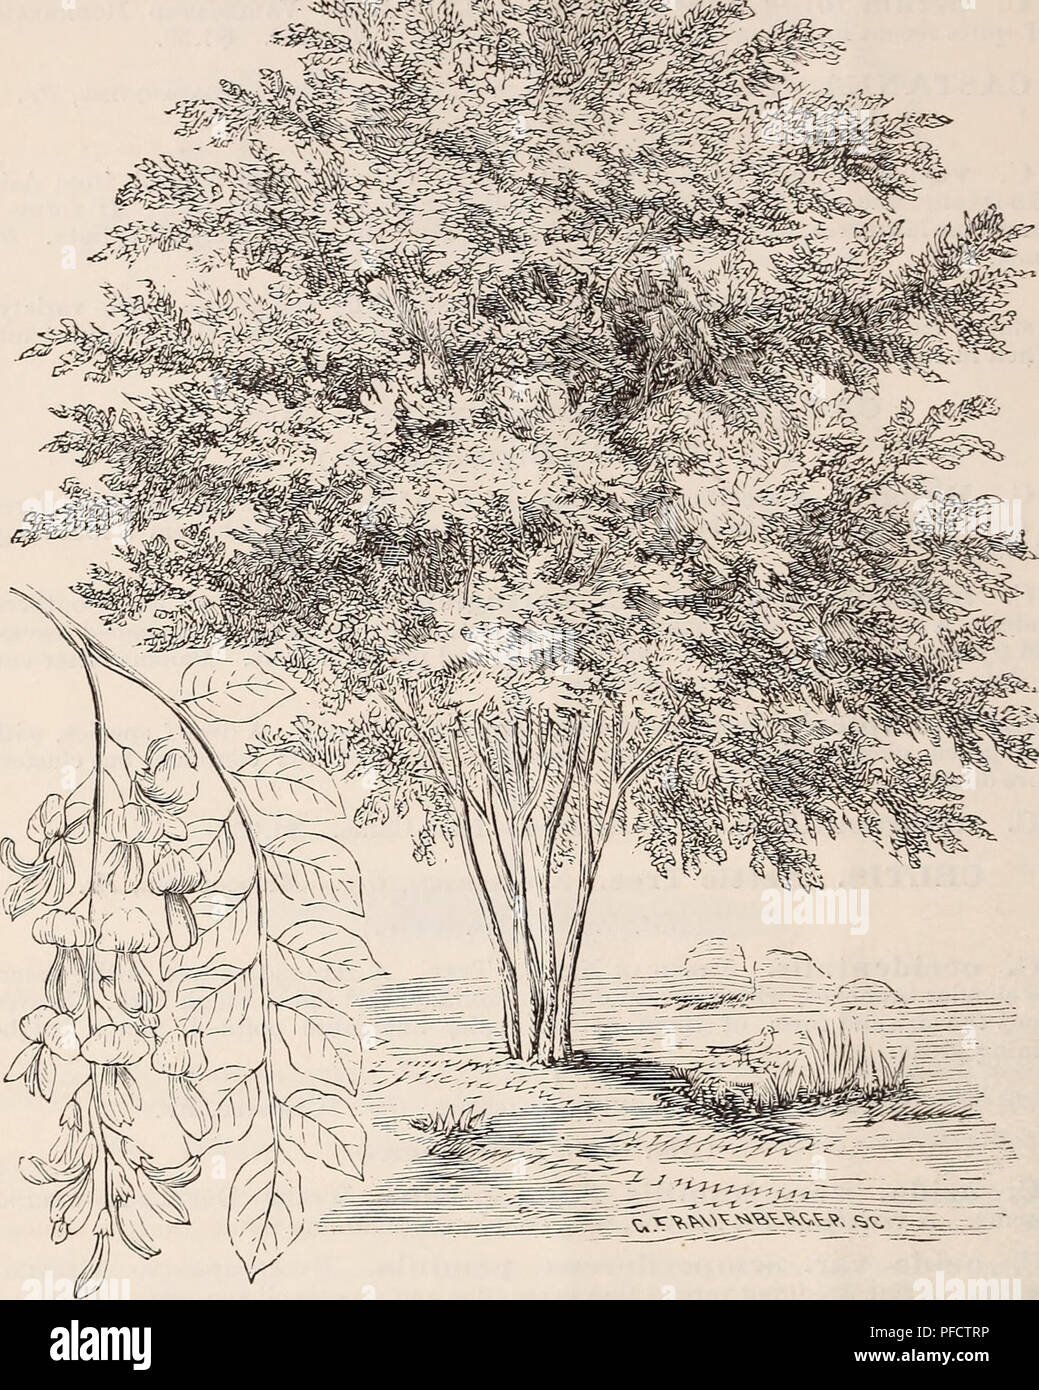 . Descriptive catalogue of ornamental trees, shrubs, roses, flowering plants, &amp;c. Ornamental trees Catalogs; Shrubs Catalogs; Roses Catalogs; Flowers Catalogs. 16 ELLWANGER d: BARRY'S CATALOGUE.. ^^:,,=.^^^-'^;^^^5'^^^^'5^'^&gt;'^V^^^'i?, .c»&lt;2, -73^^ CLADASTRIS TINCTORIA. Sljll. VIRGTLEA LUTEA, (Yellow Wood.) O. Sieboldii rubra plena. Siebold's Double Eed-floweking Cheery. $1.00. The last two are said to be remarkable varieties from Japau. Flowers large and fine. CERCIS. Judas' Tree, or Red Bud. Judas BAmr, Gar. Gainier, Fr. {Ndt. Ord. Fabaceje.) A very ornamental native tree, of medi Stock Photo